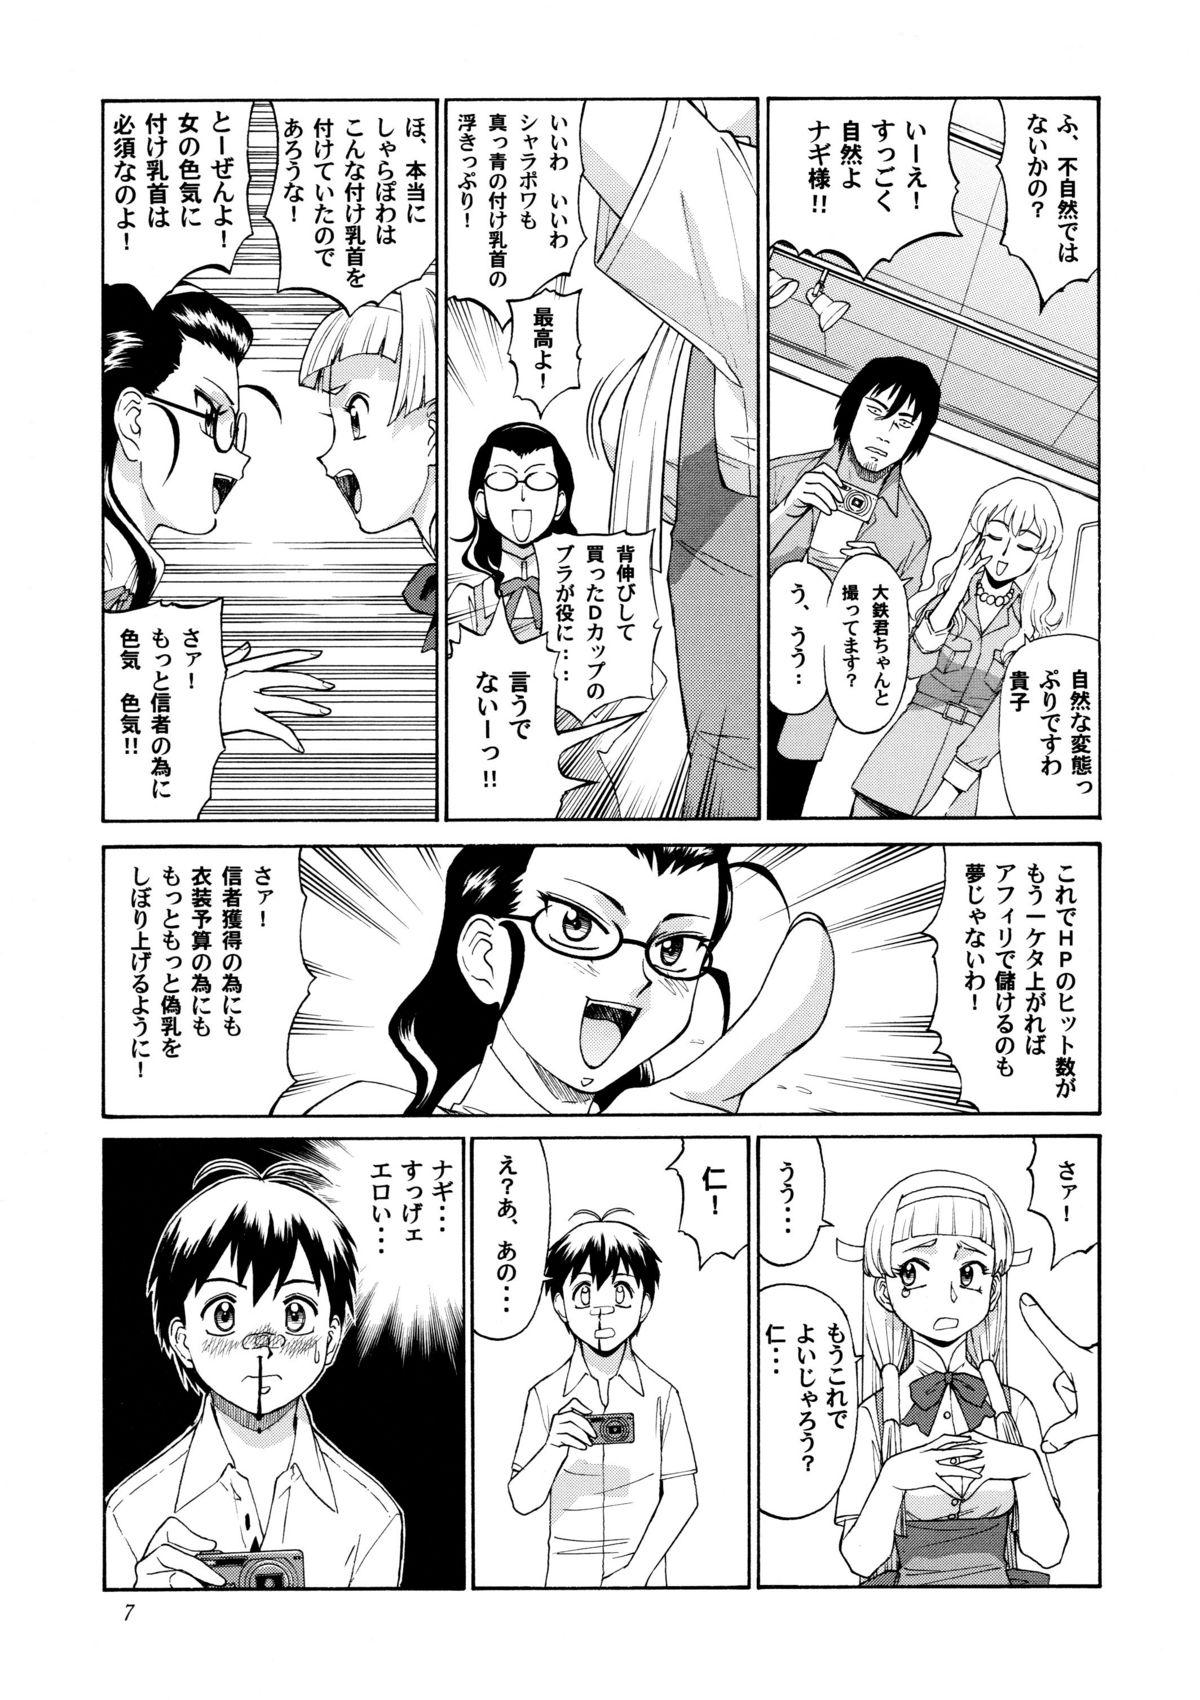 Legs Kamisama Megaton Punch 11 - Urusei yatsura Kannagi Utawarerumono Kamichu Wagaya no oinari-sama Brasileira - Page 6